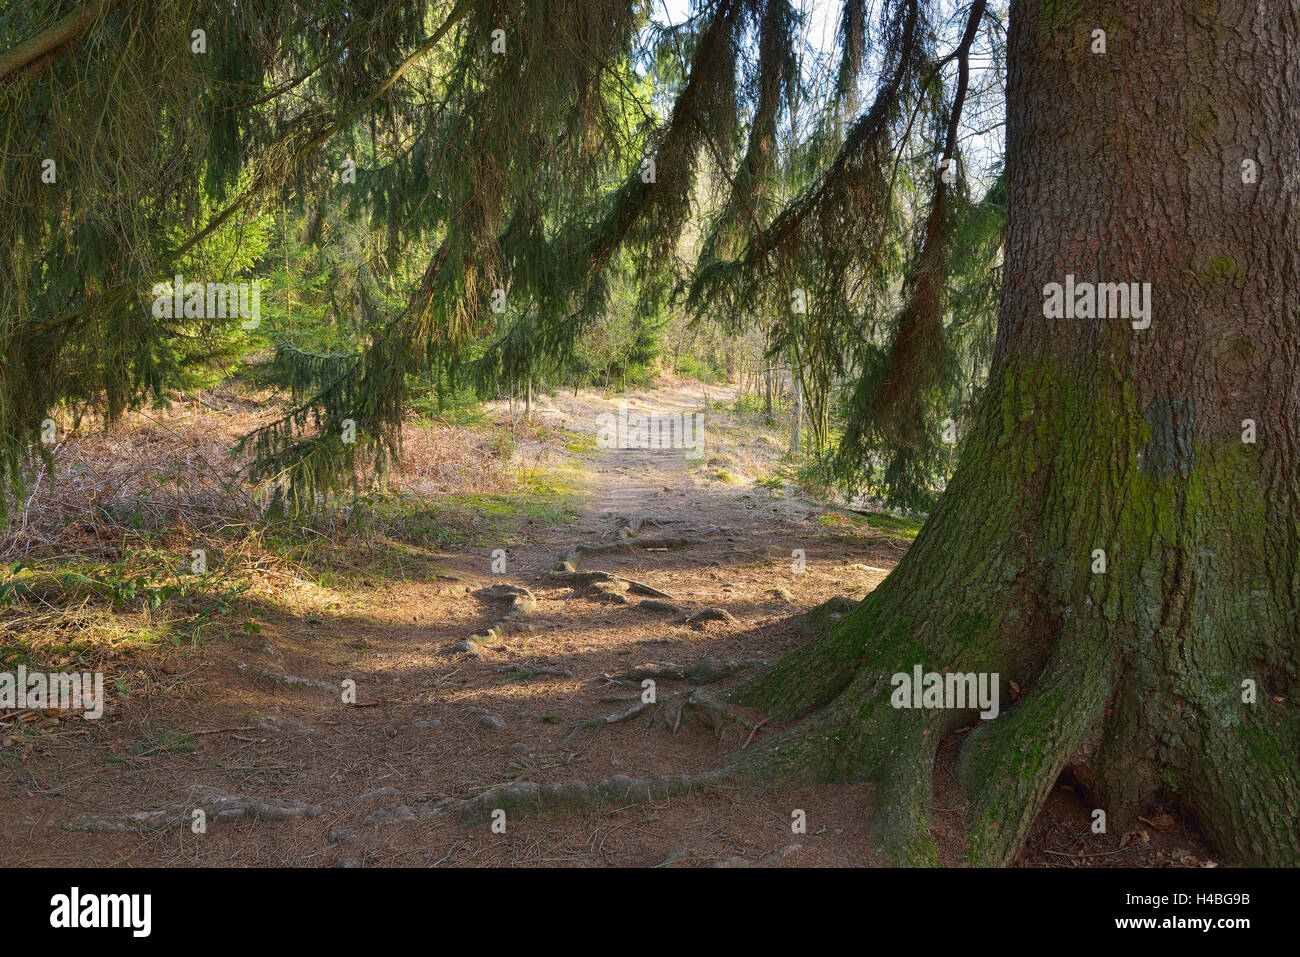 Conifer Tree with Path, Urwald Sababurg, Hofgeismar, Reinhardswald, Hesse, Germany Stock Photo